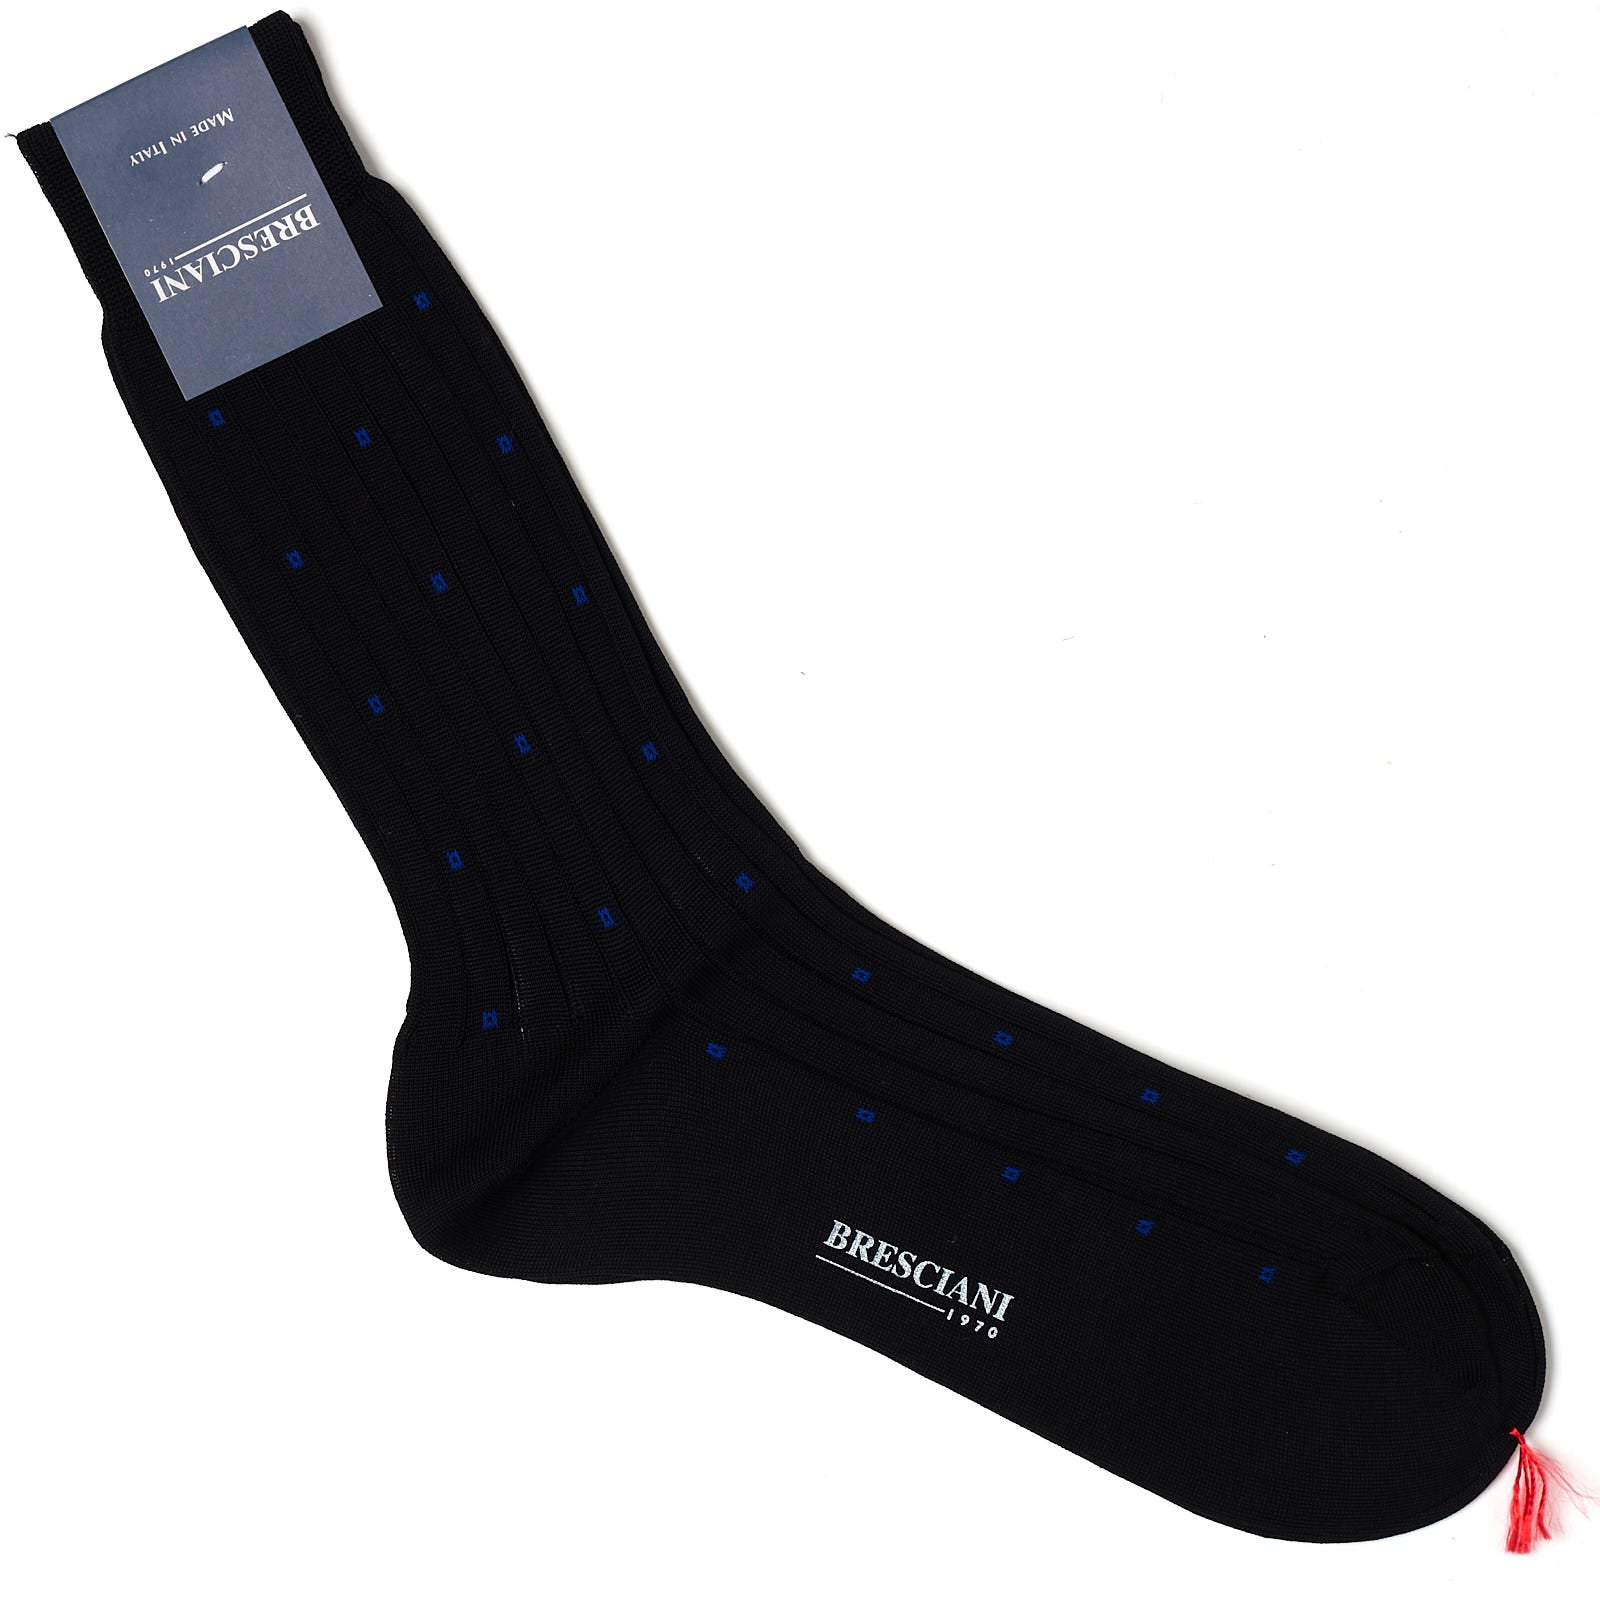 BRESCIANI Cotton Polka Dot Design Mid Calf Length Socks US M-L